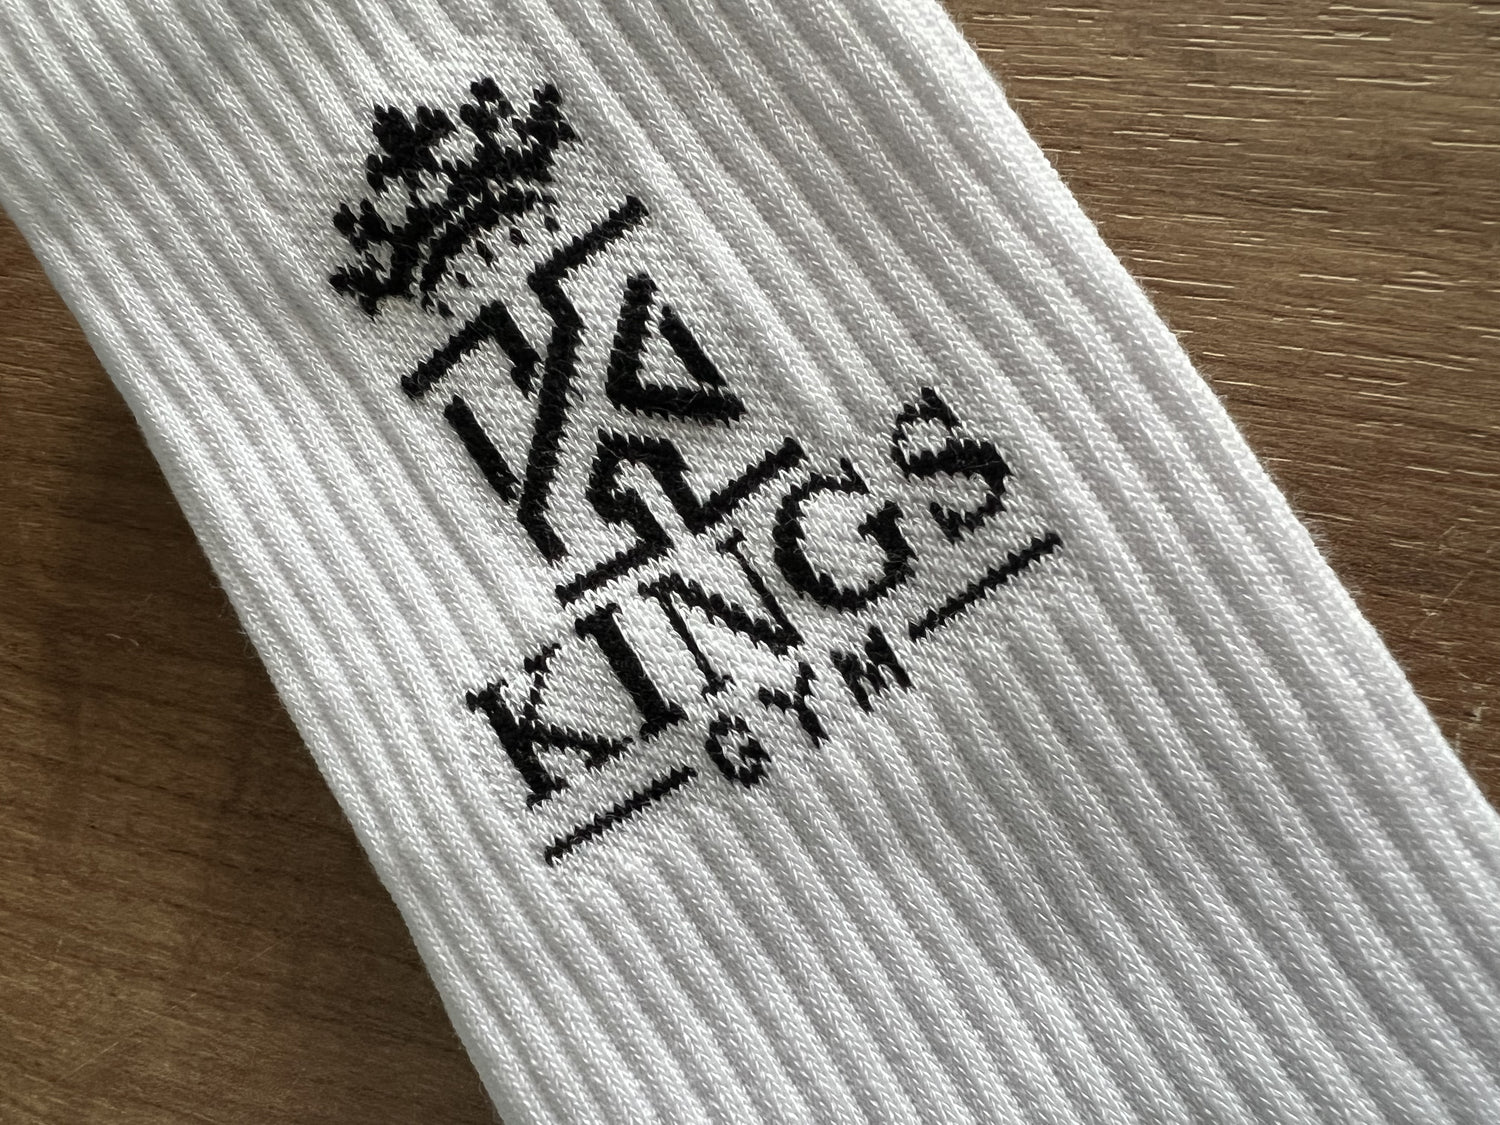 Kings Classic Gym Vest – kingsgyms